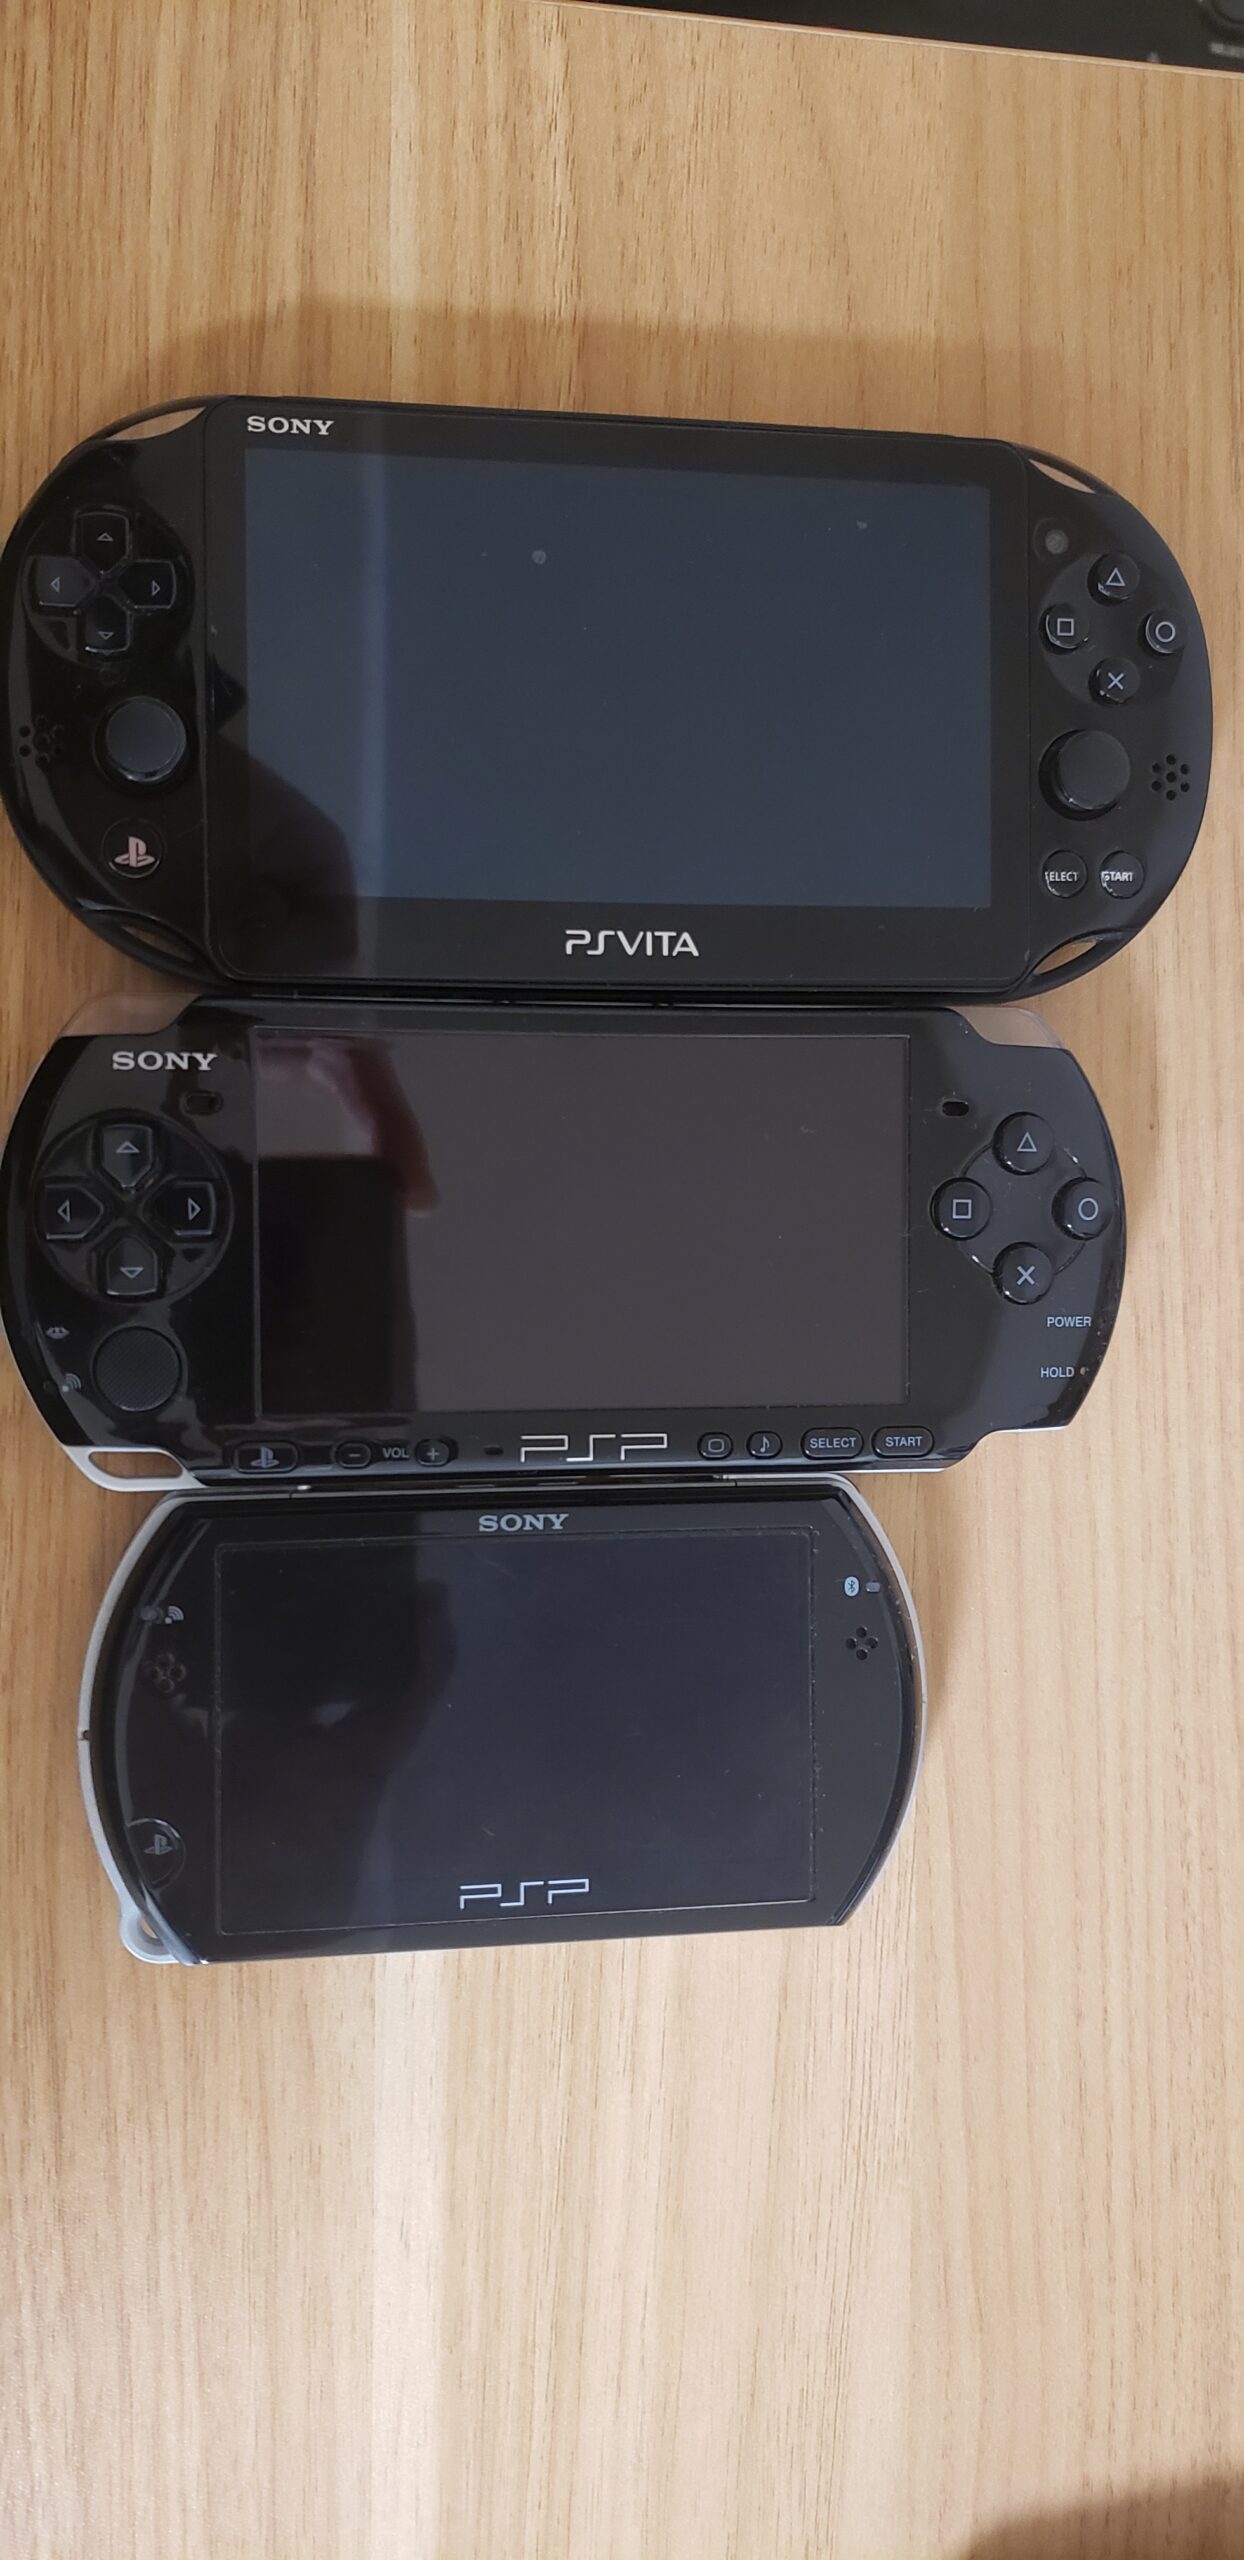 【セット販売・動作品】PSVITA +PSP